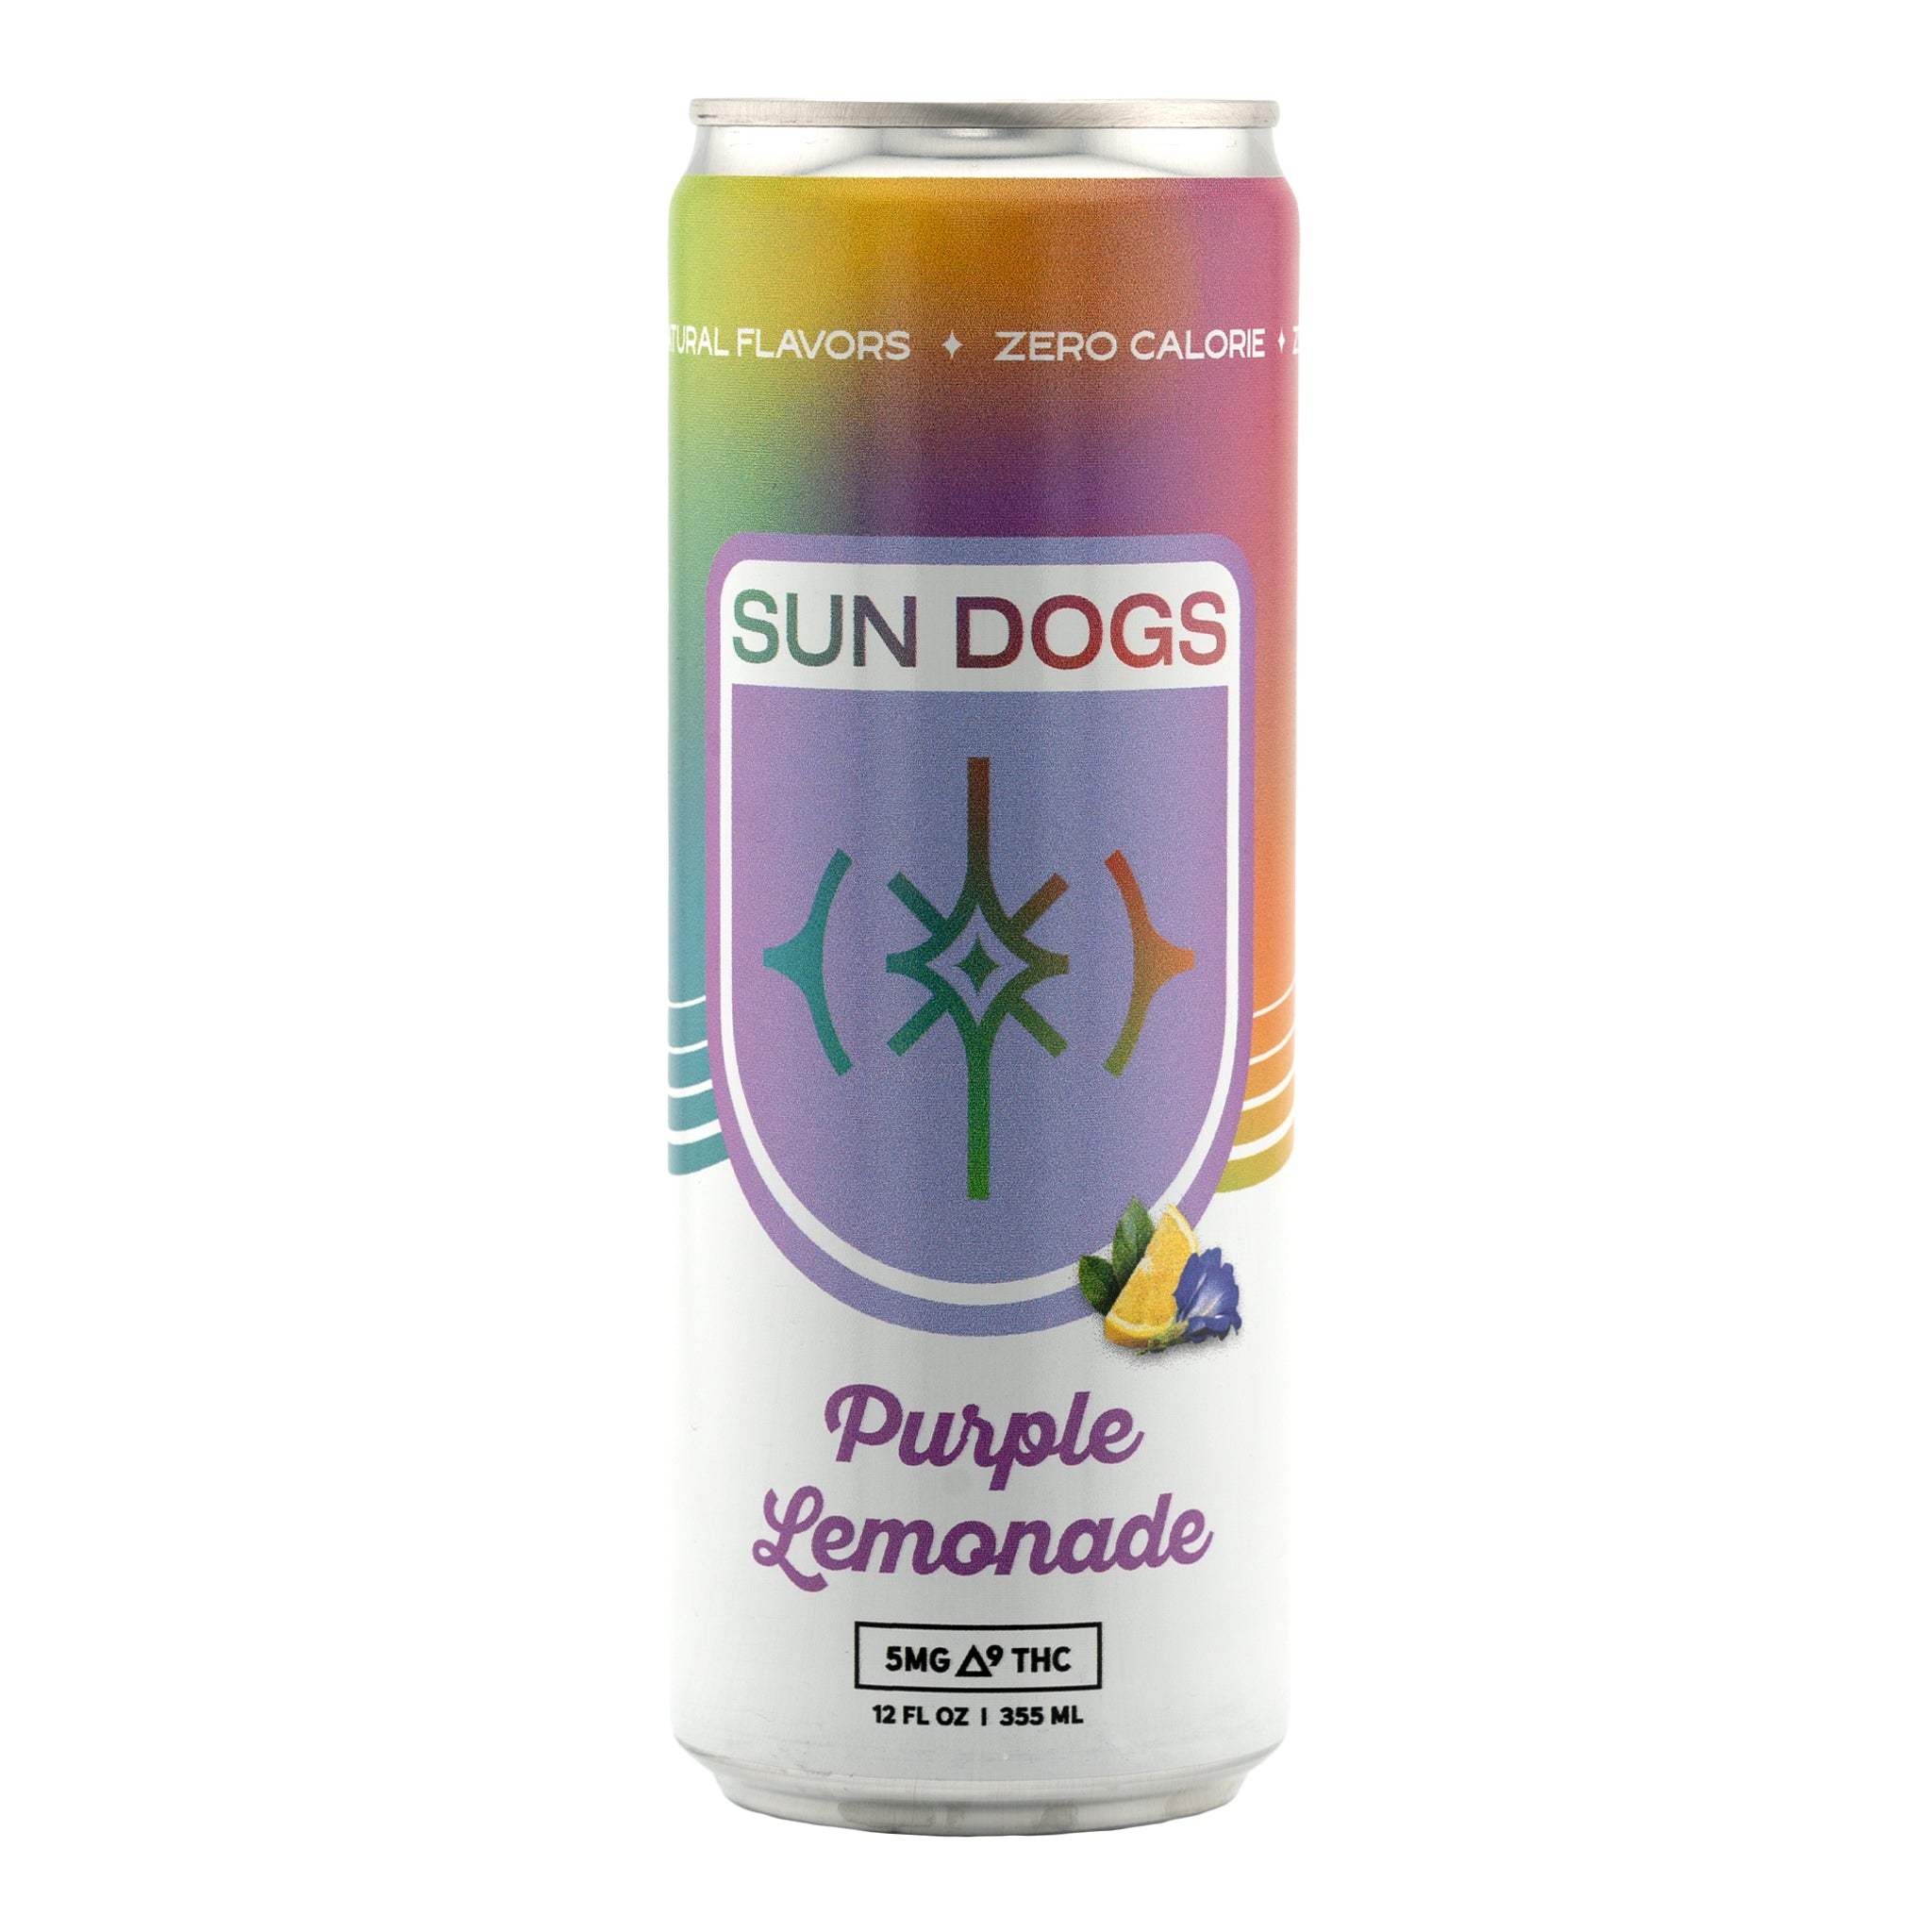 SUN DOGS (3 Flavors) 5 mg THC